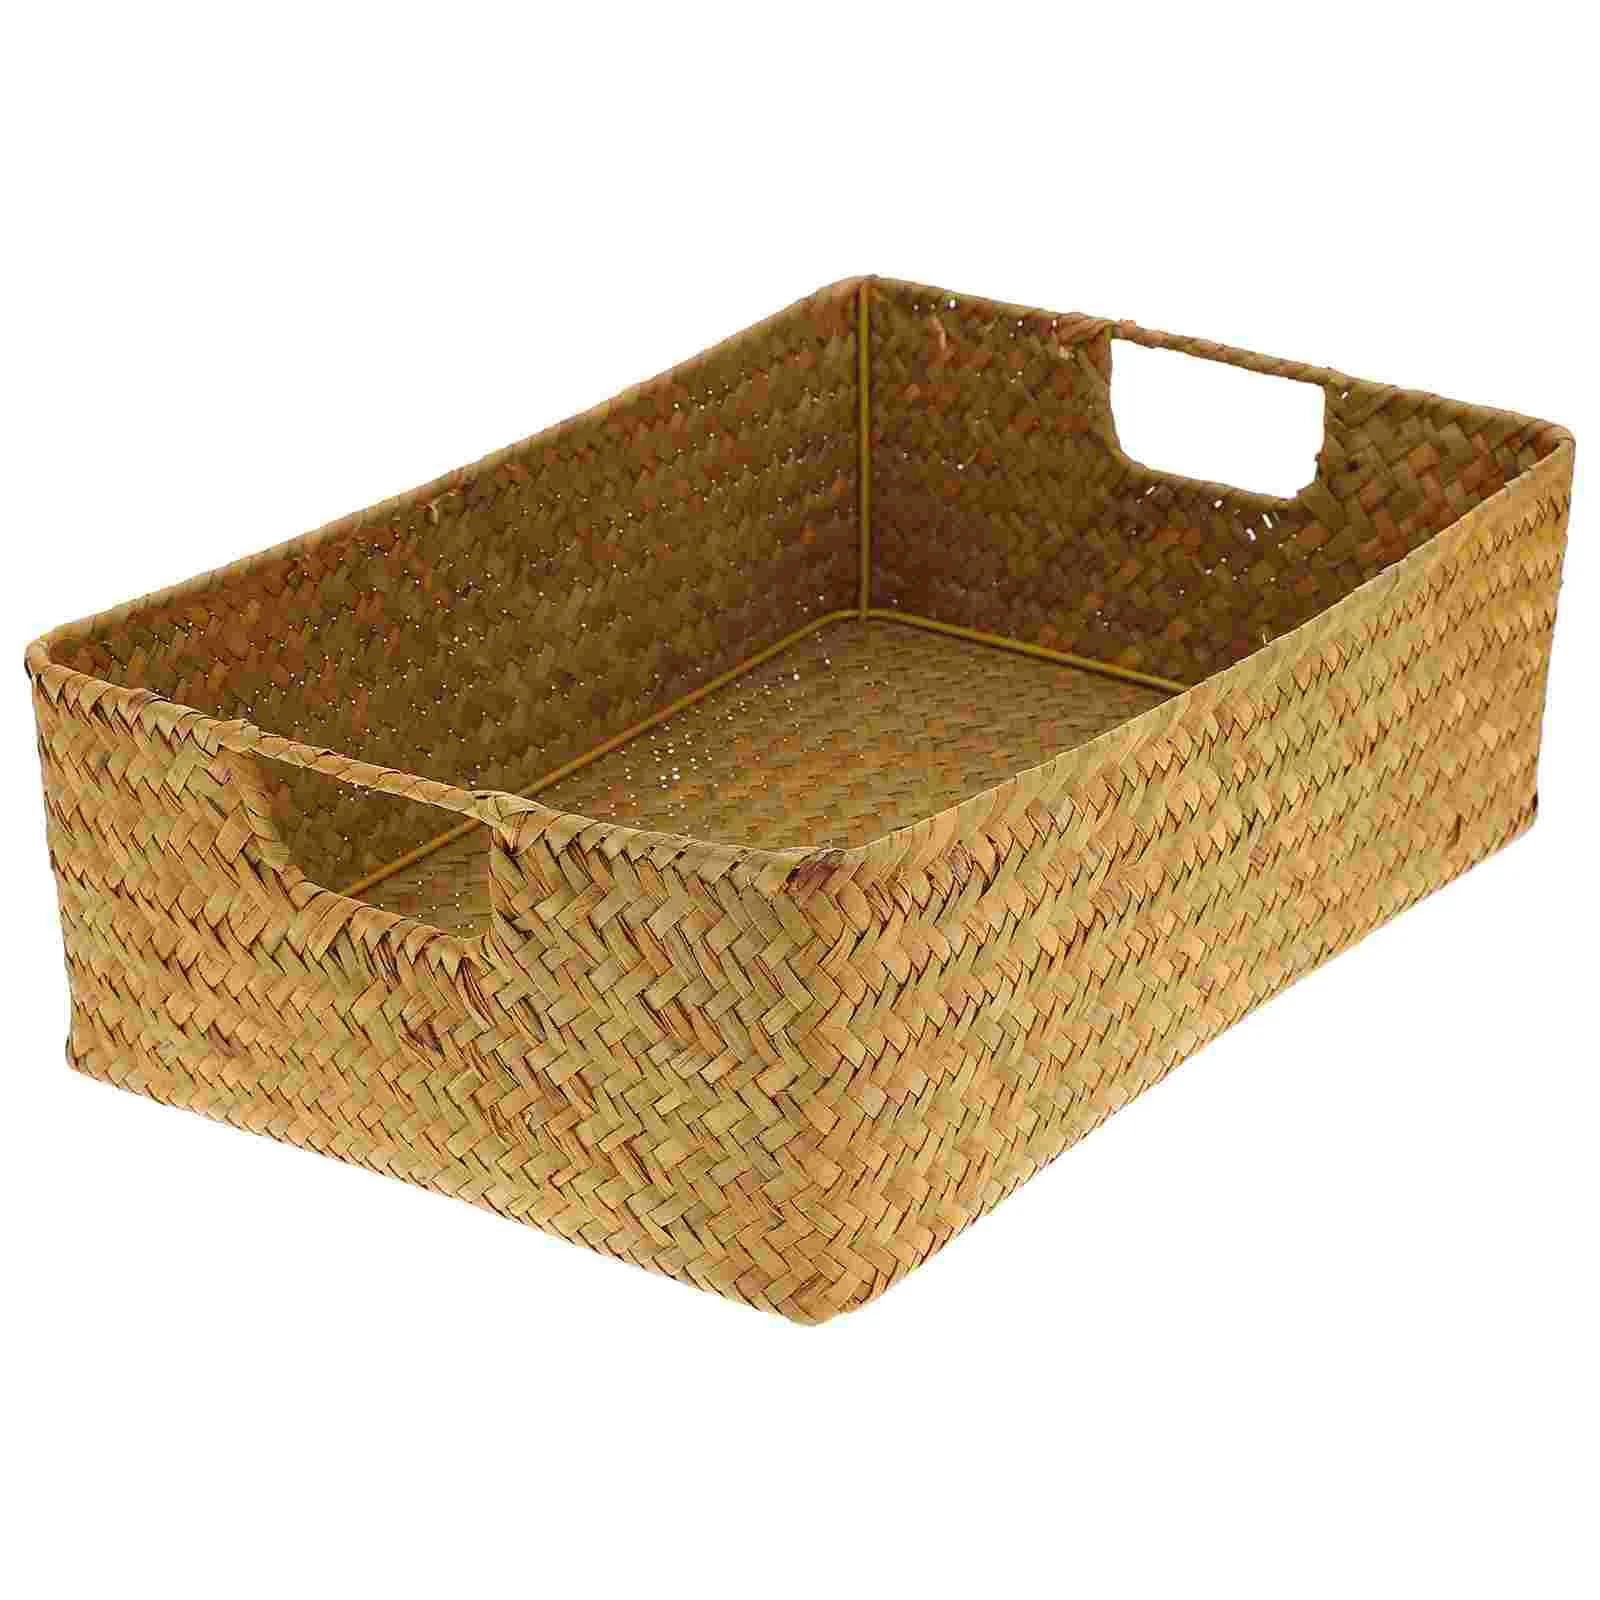 

Storage Basket Handmade Seaweed Bin Practical Woven Handwoven Rectangular Trays Food Serving